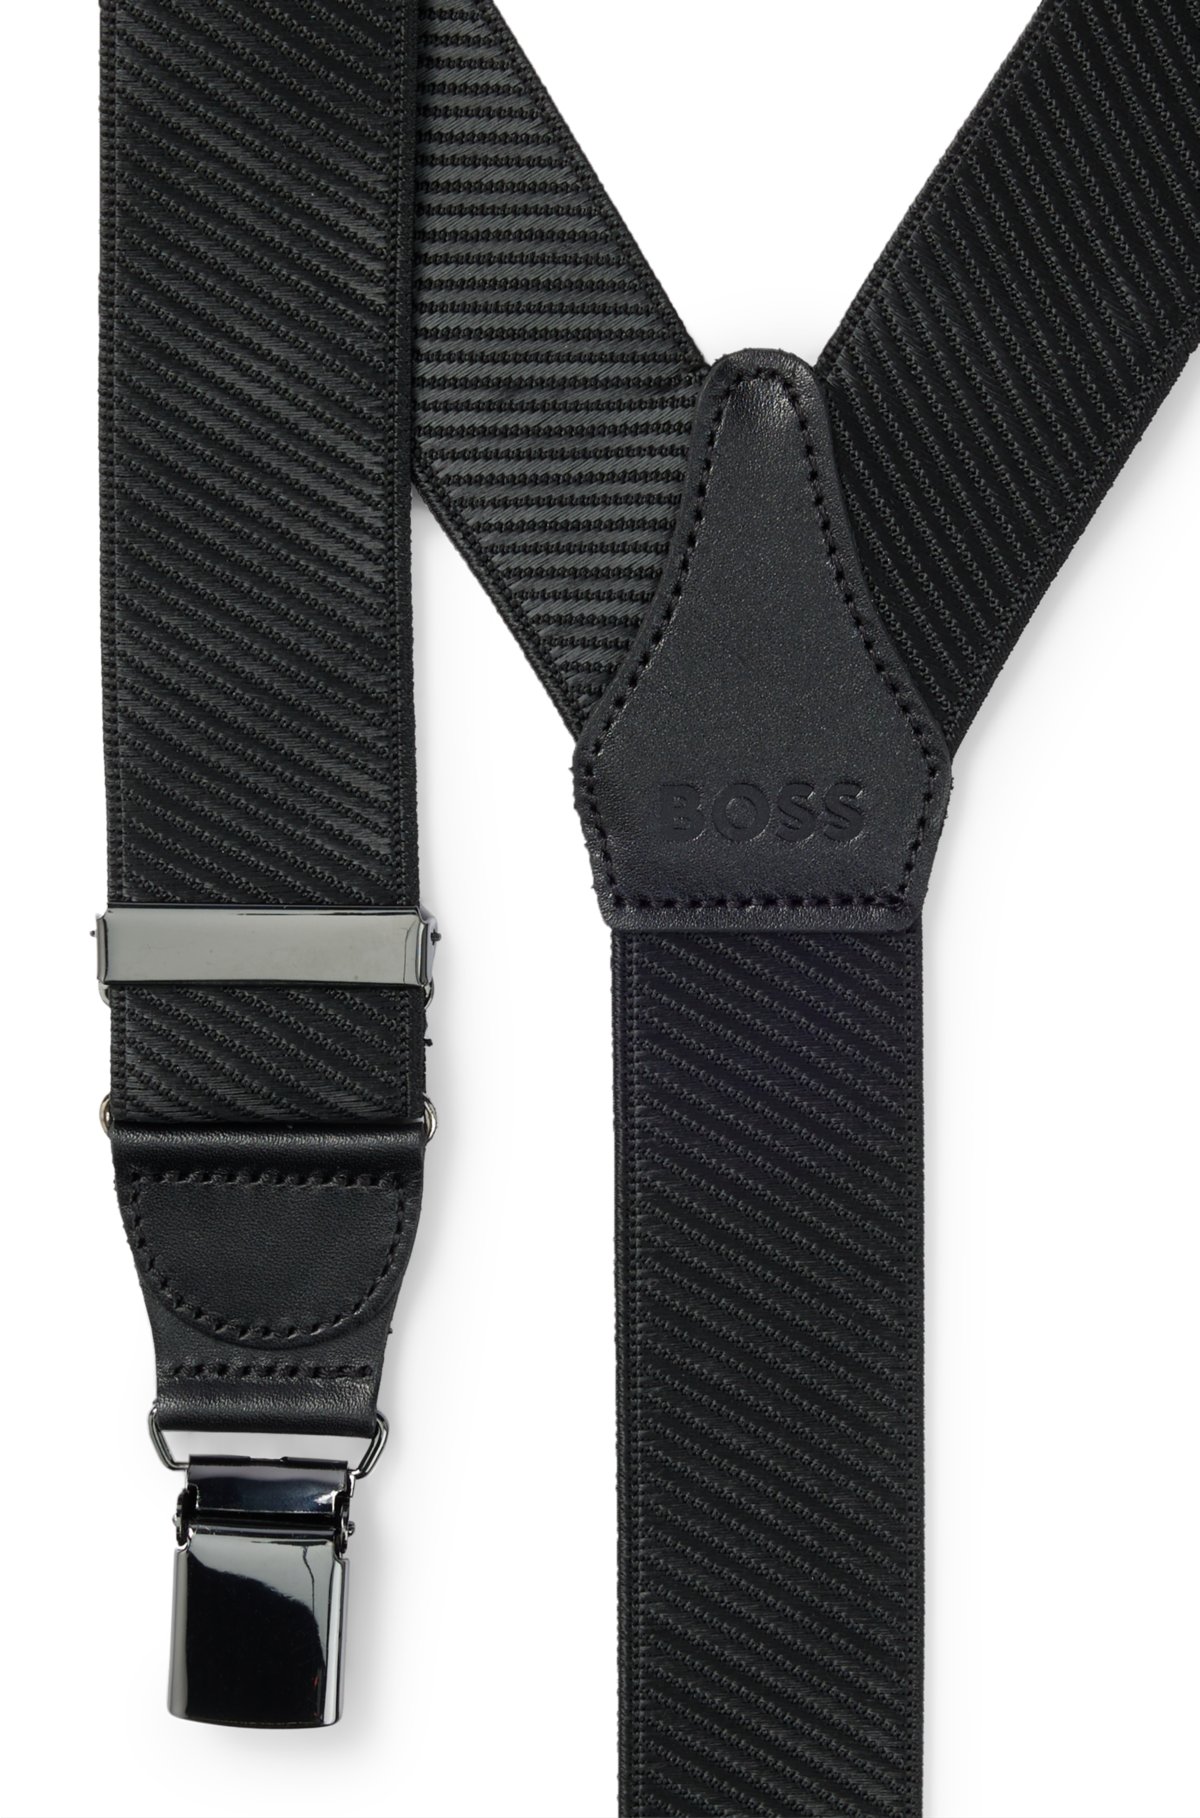 Black Clip-On Braces